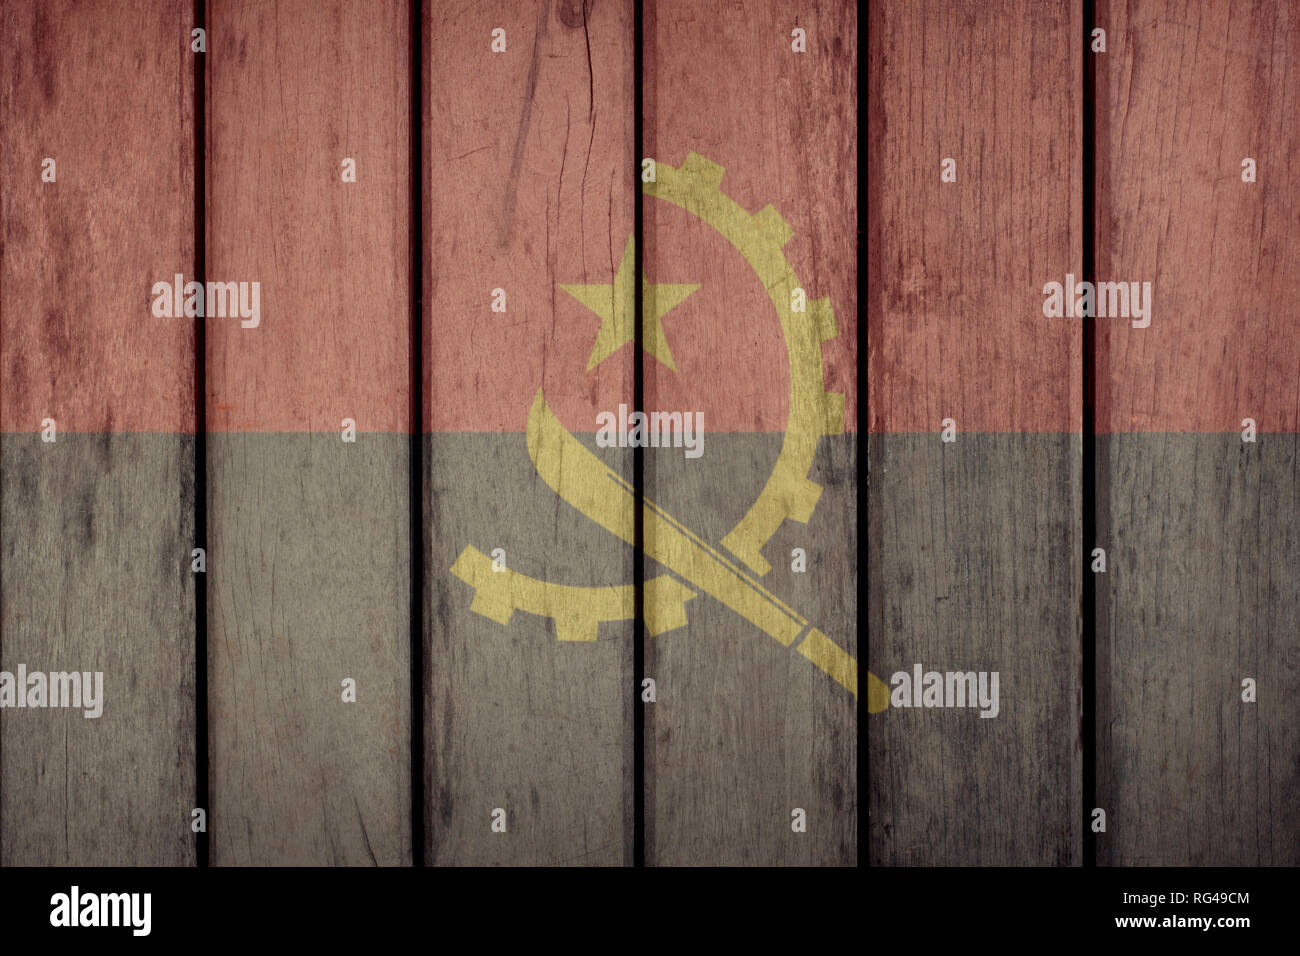 Angola Noticias Política Concepto: Bandera de Angola valla de madera Foto de stock